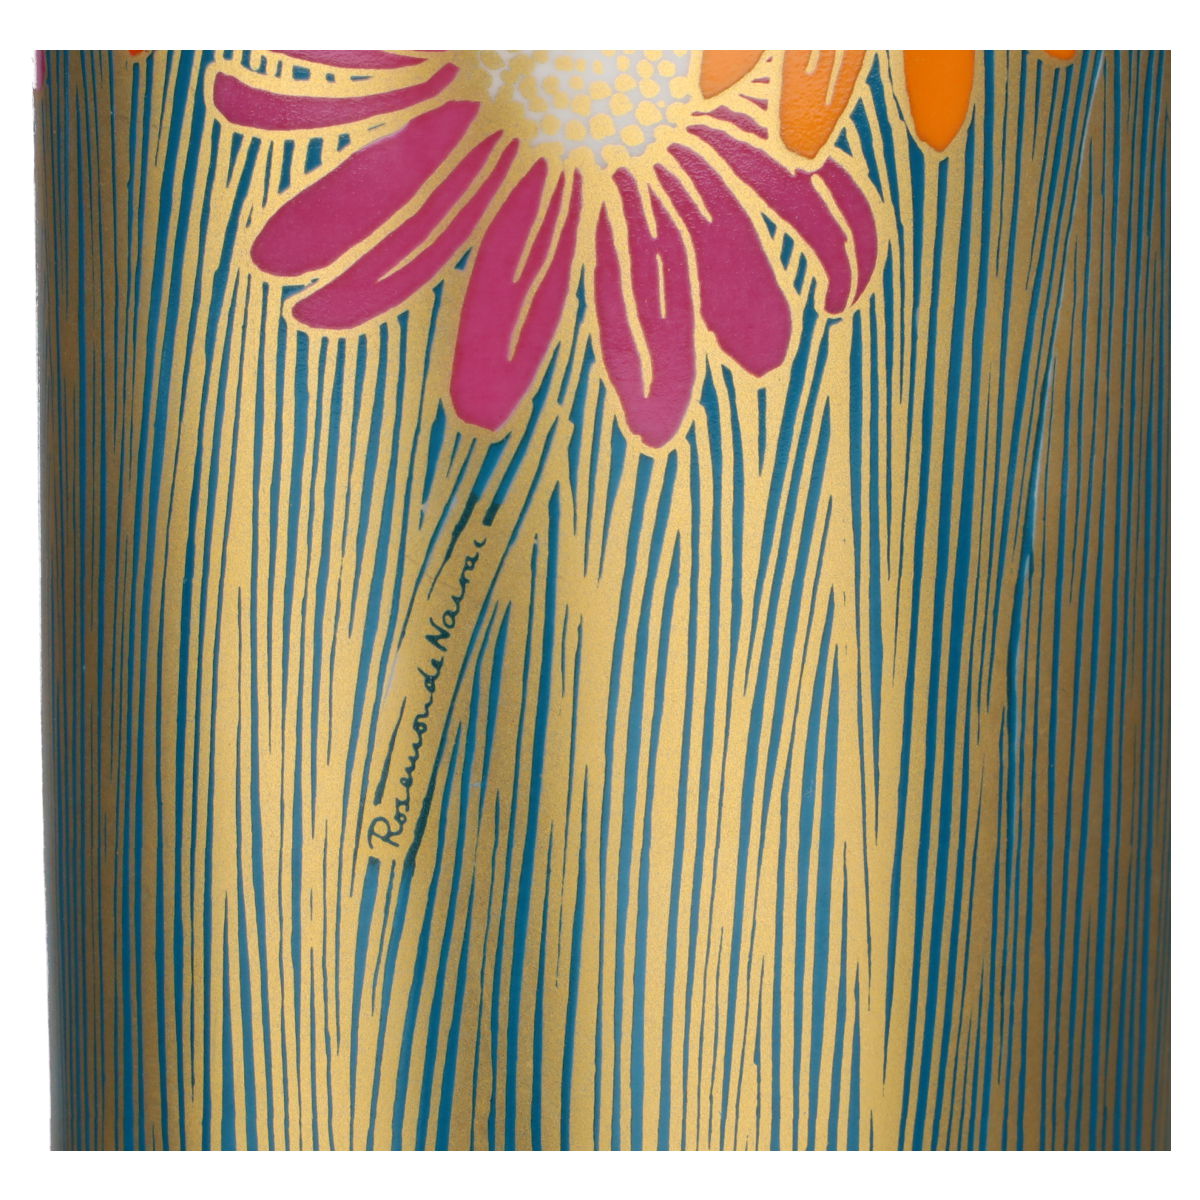 Vase oval Goldmargeriten Form 2767